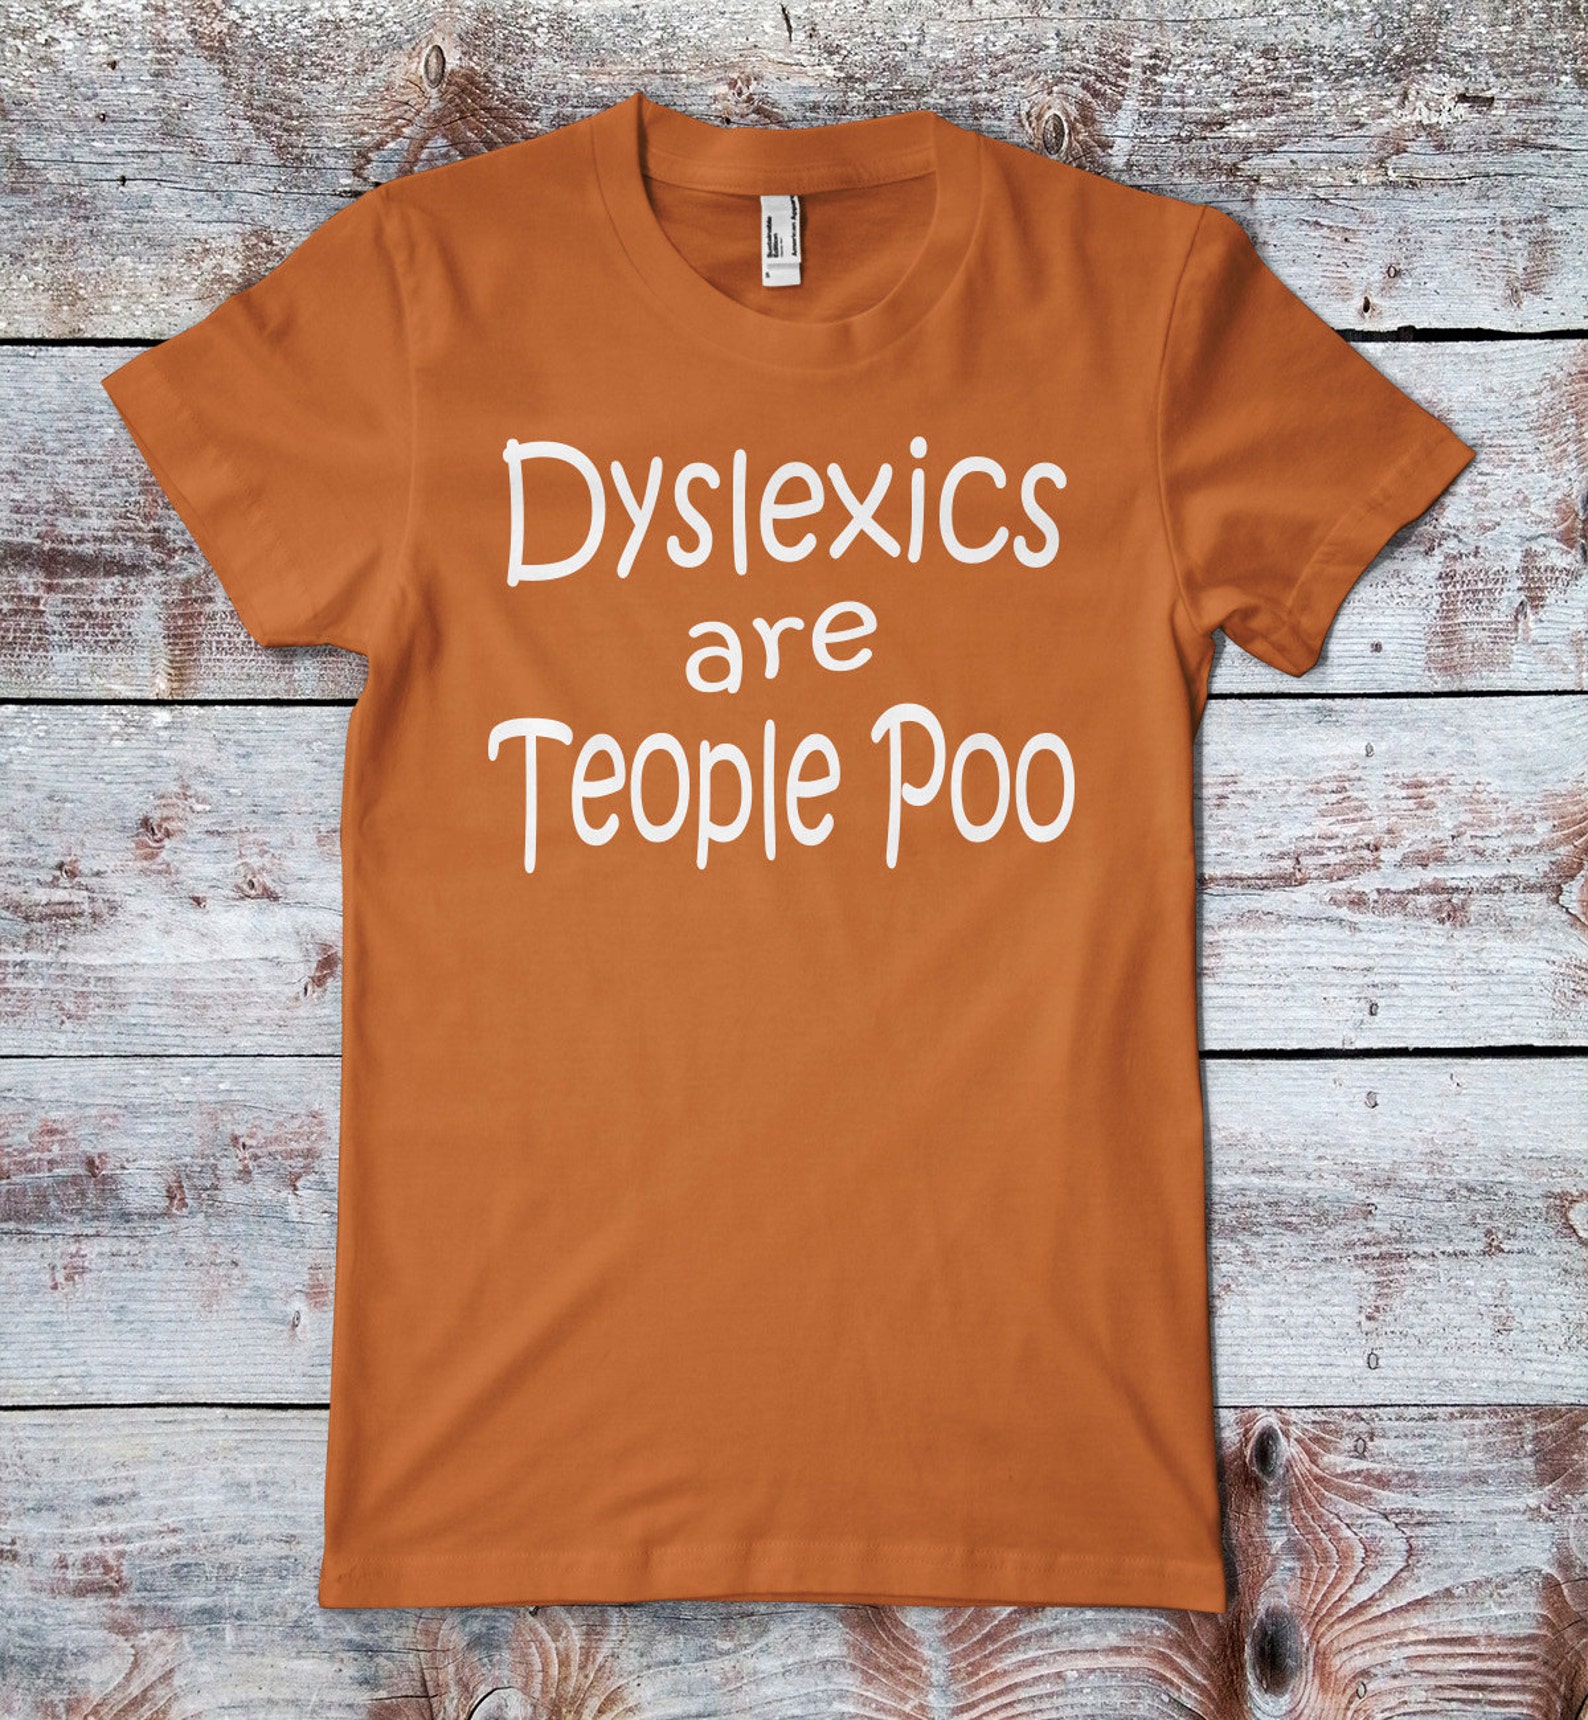 Dyslexia/Dyslexic T-shirt/Teople poo Humor/Funny Dyslexia | Etsy